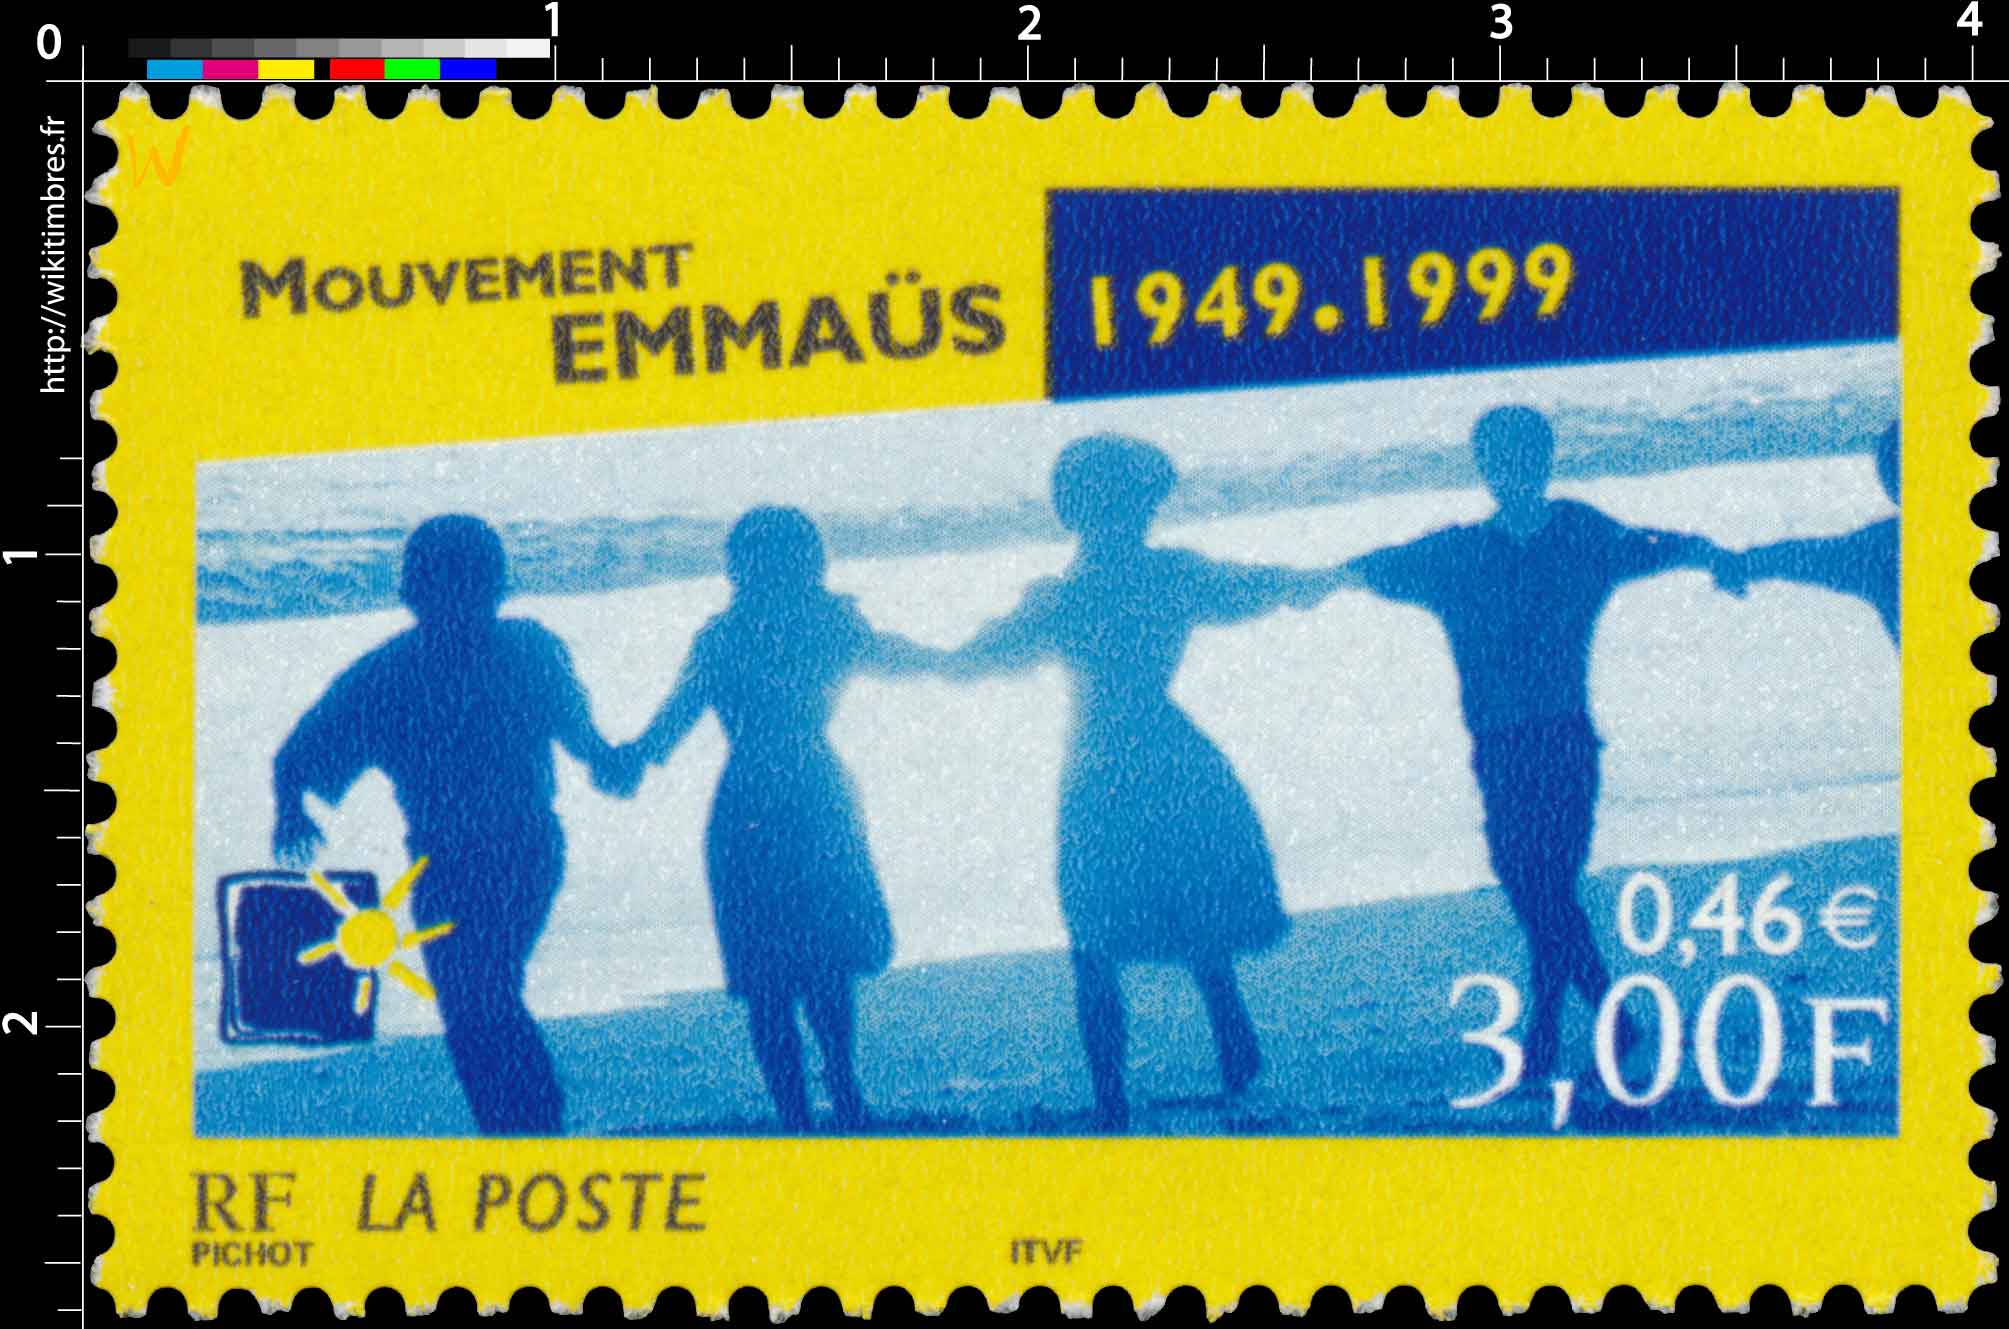 MOUVEMENT EMMAÜS 1949-1999